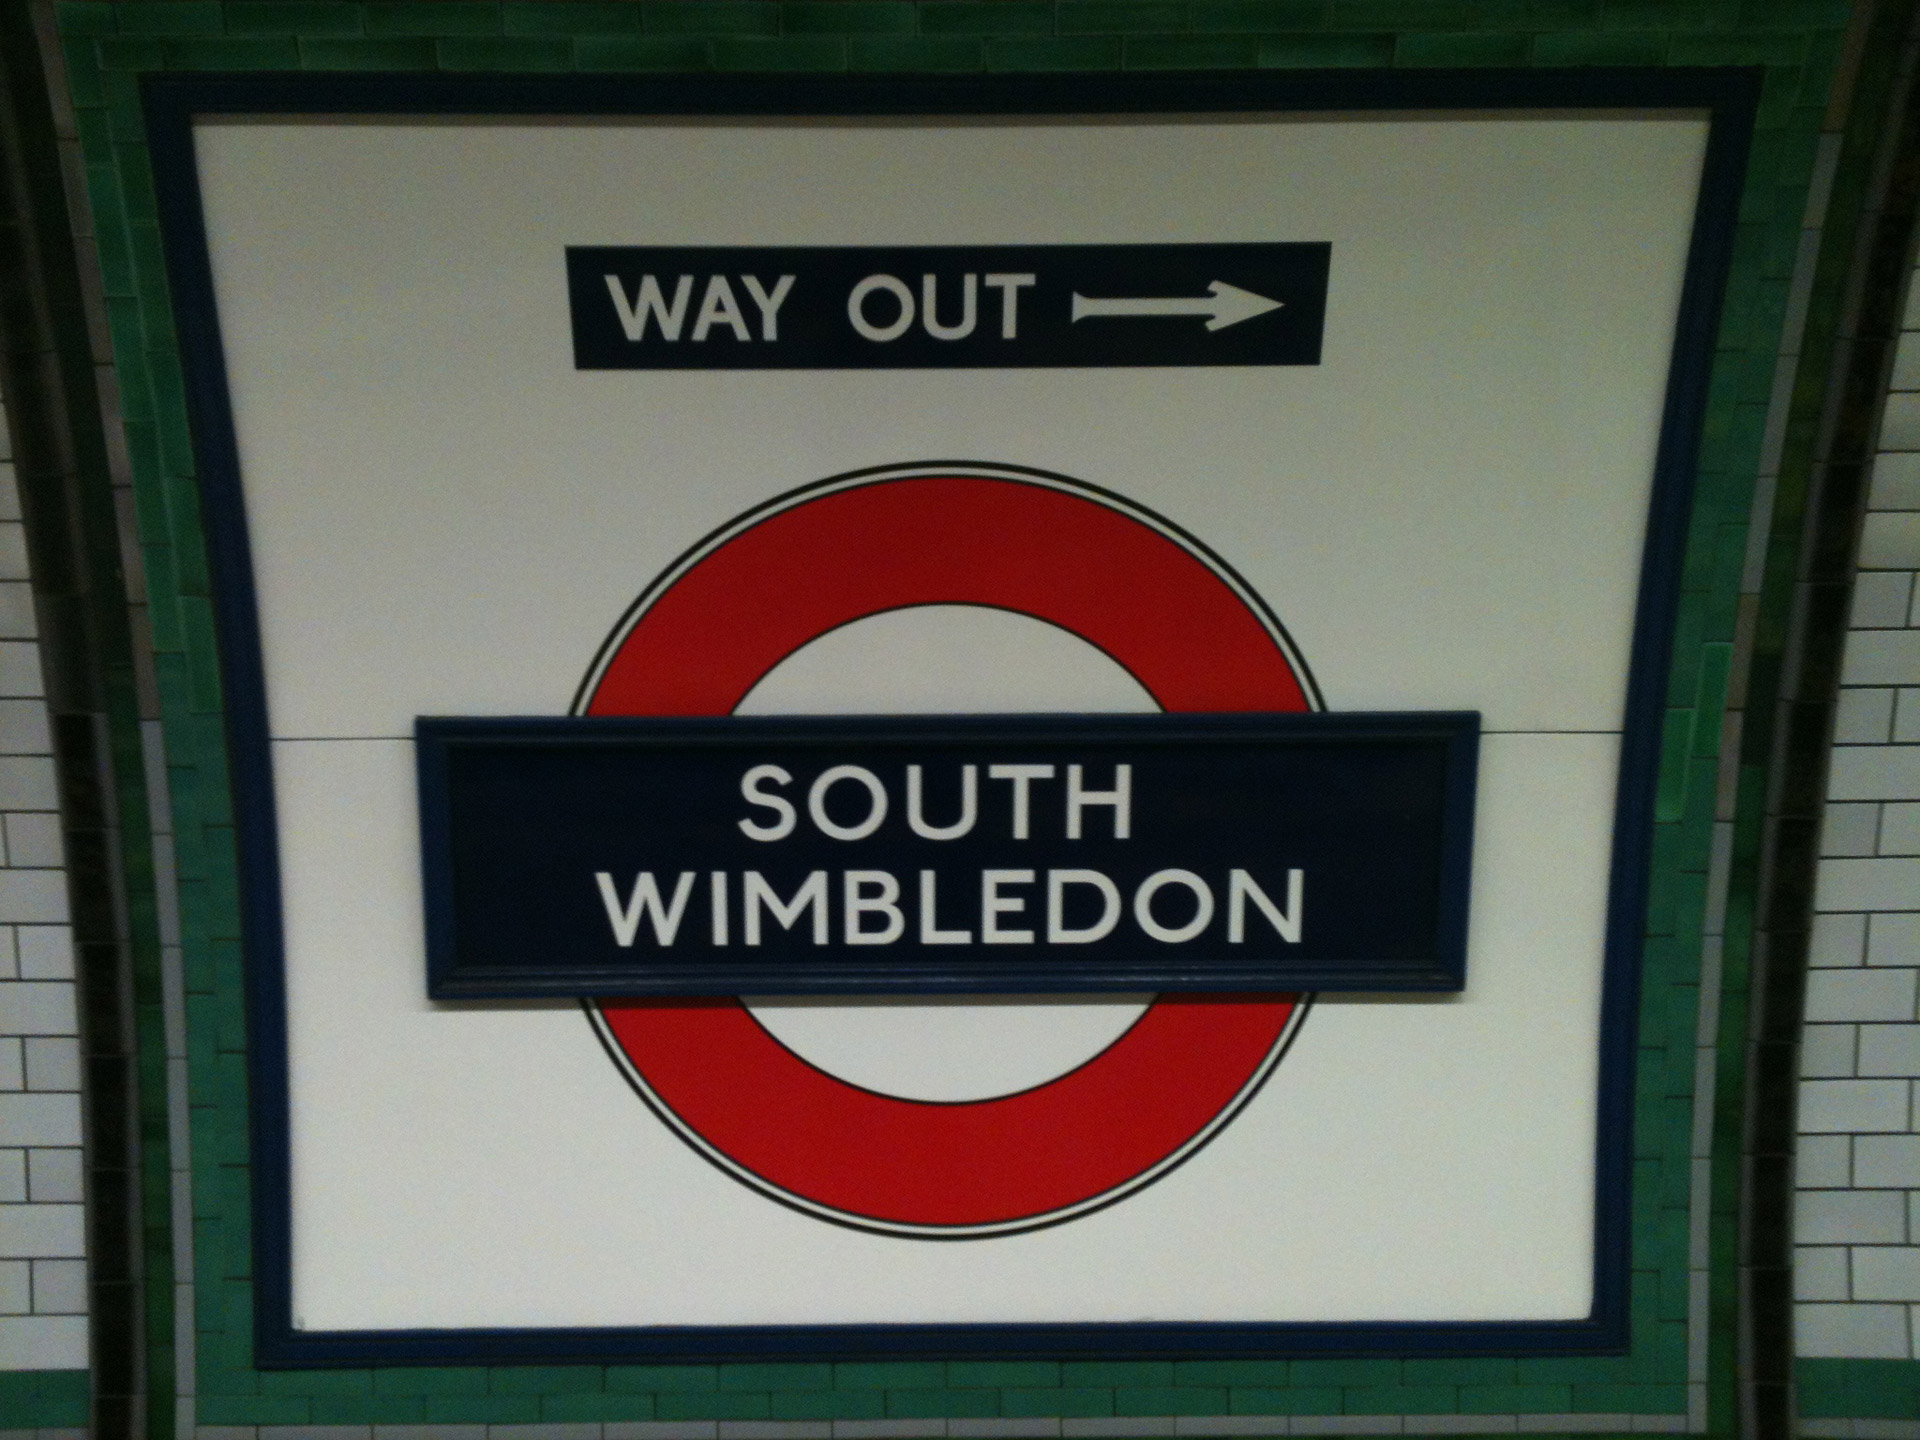 London underground sign on the platform at South Wimbledon station